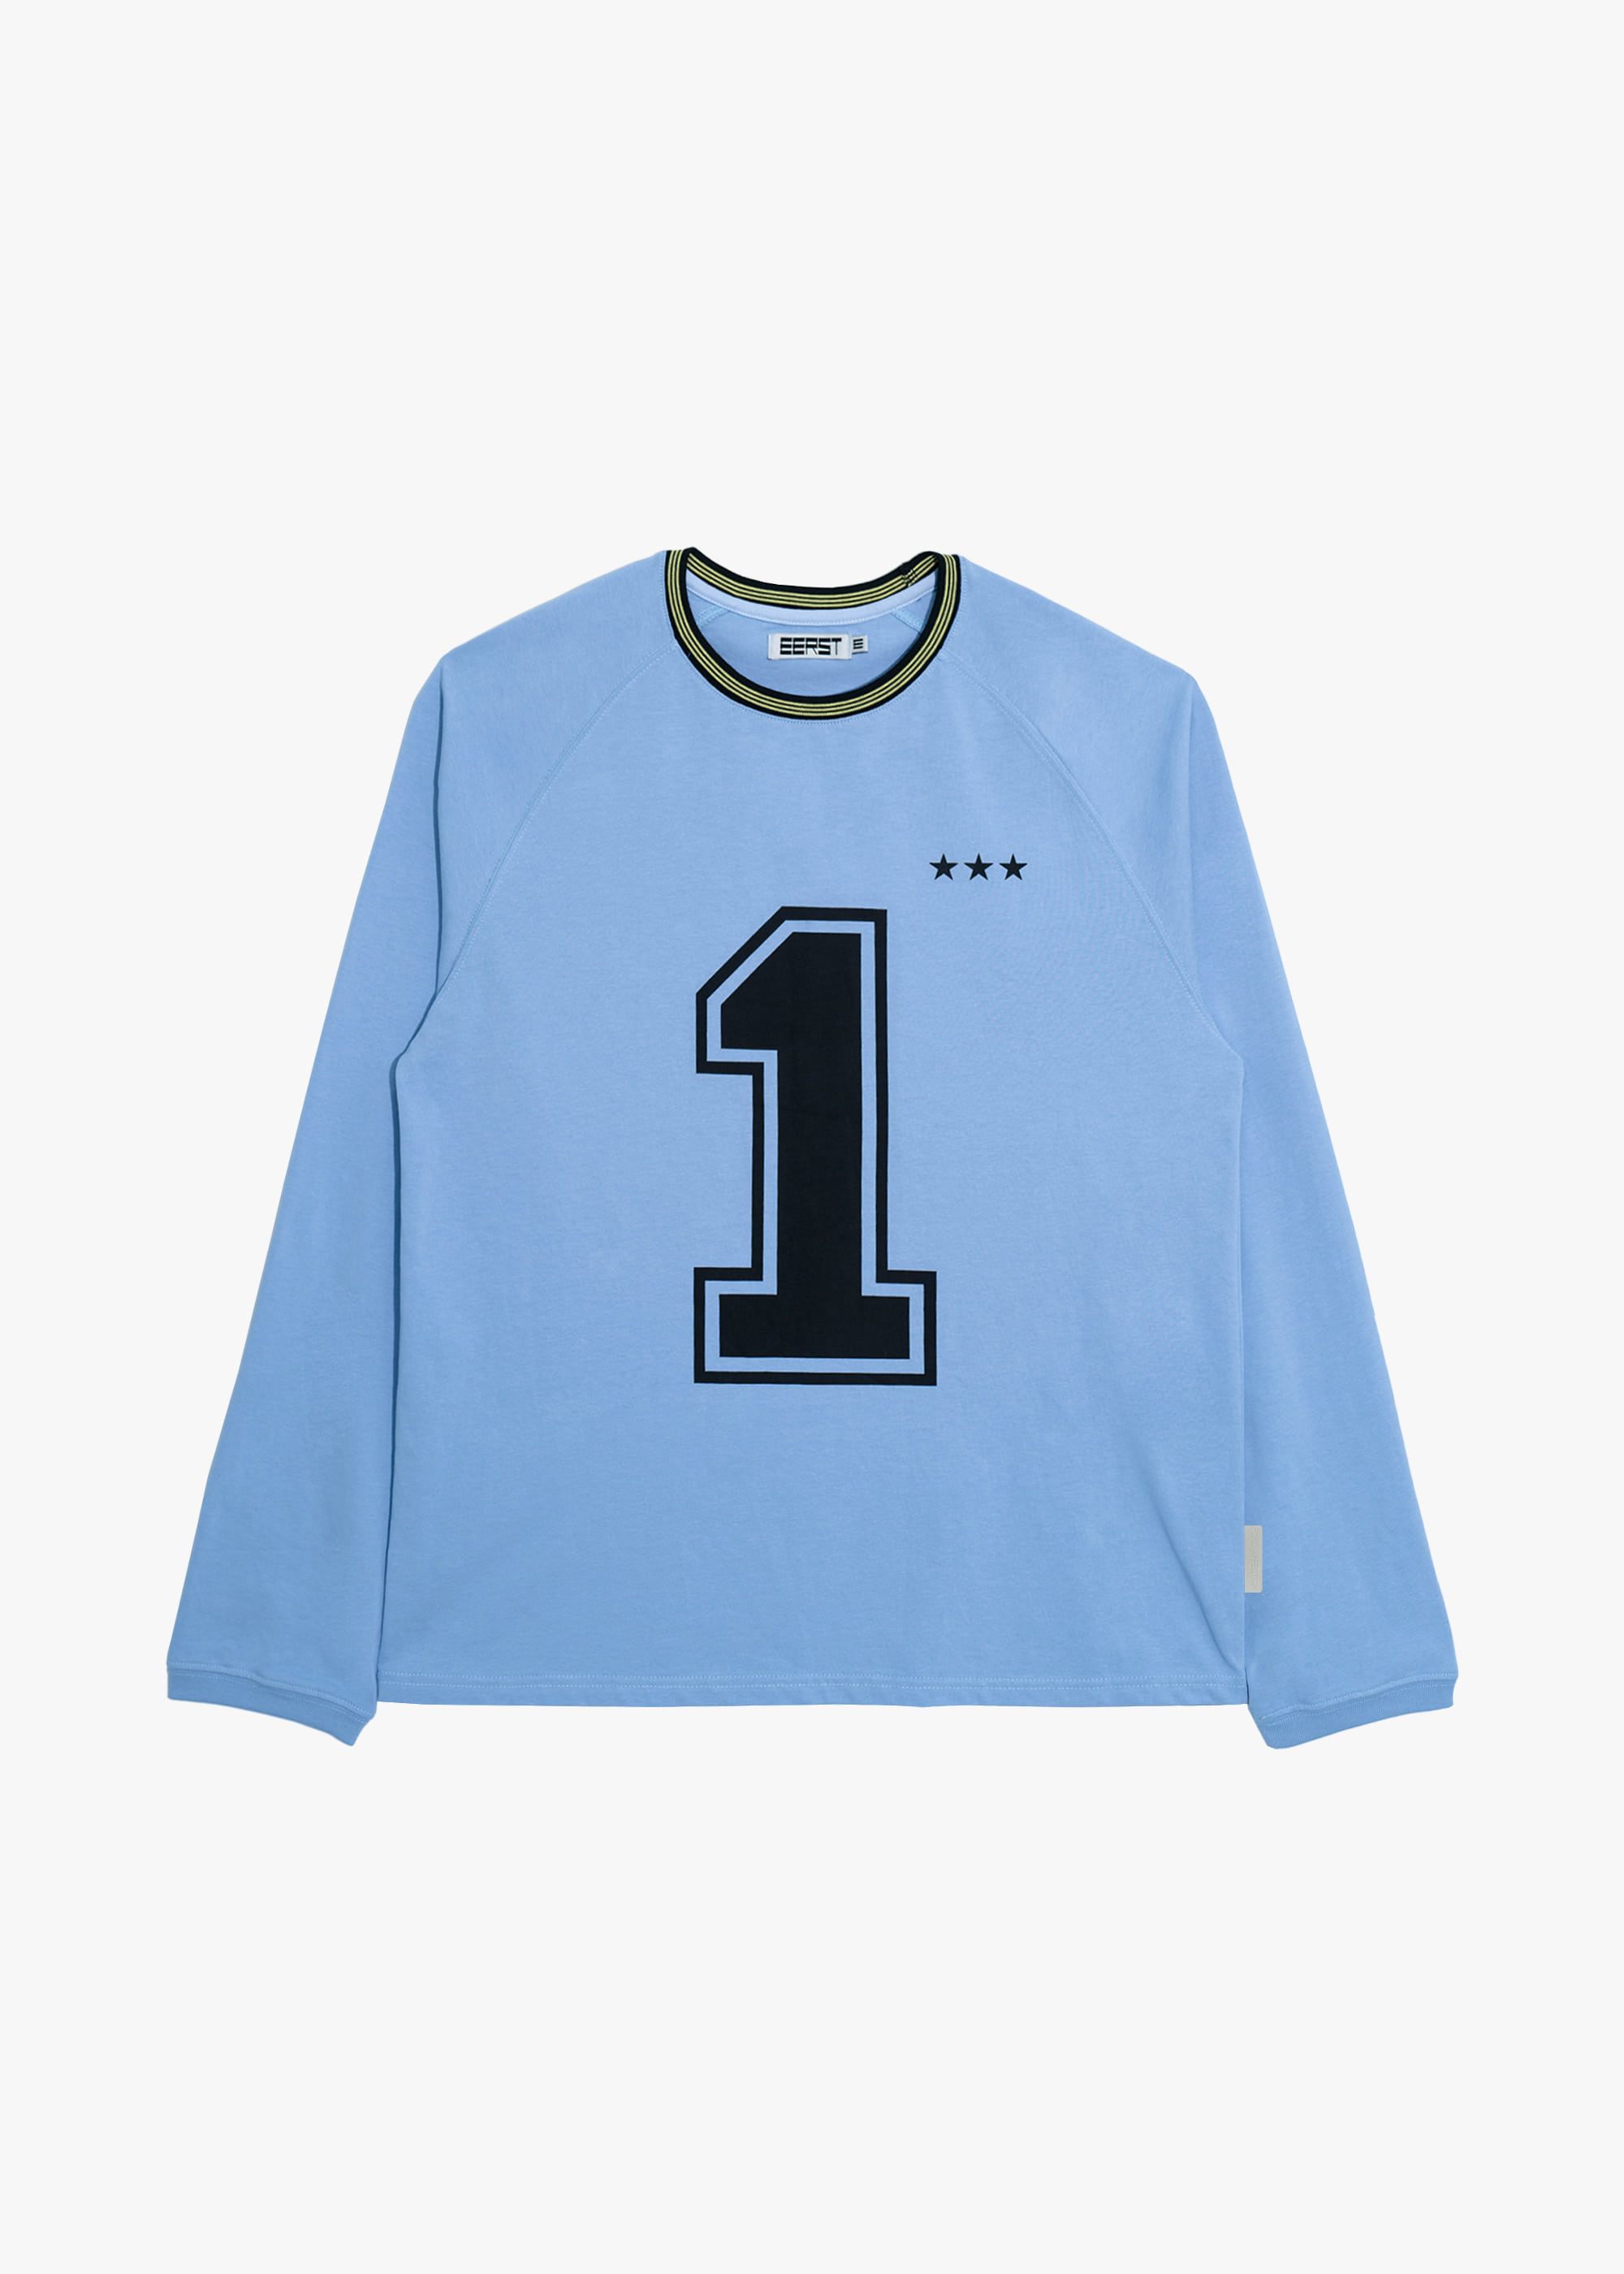 1-Sports T-shirt [Blue]